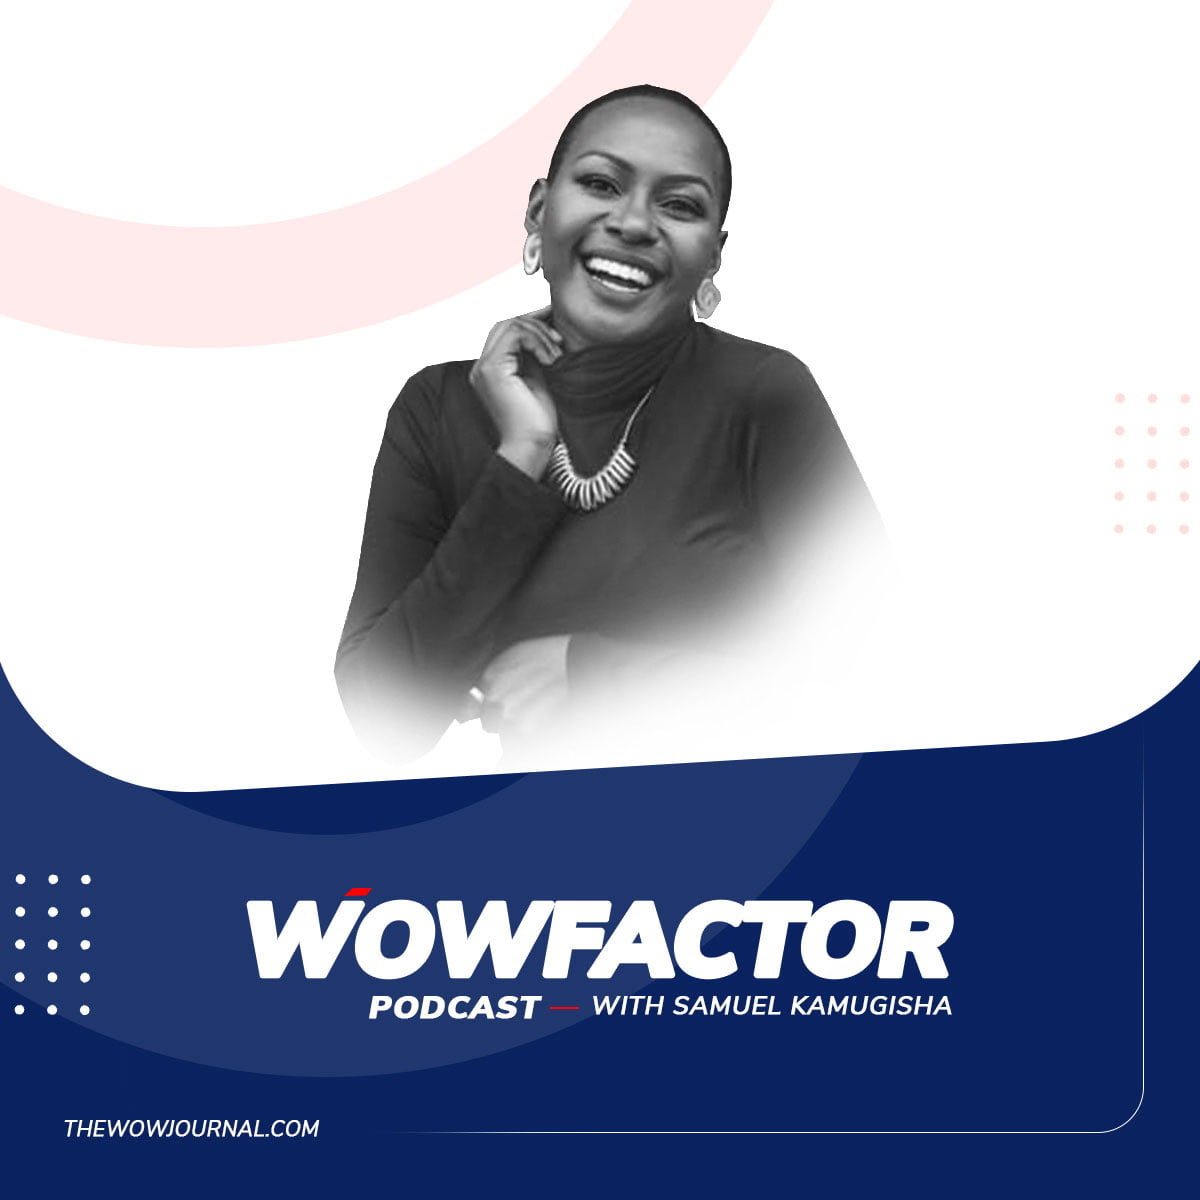 Rebecca Nanjego - WowFactor Testimonial